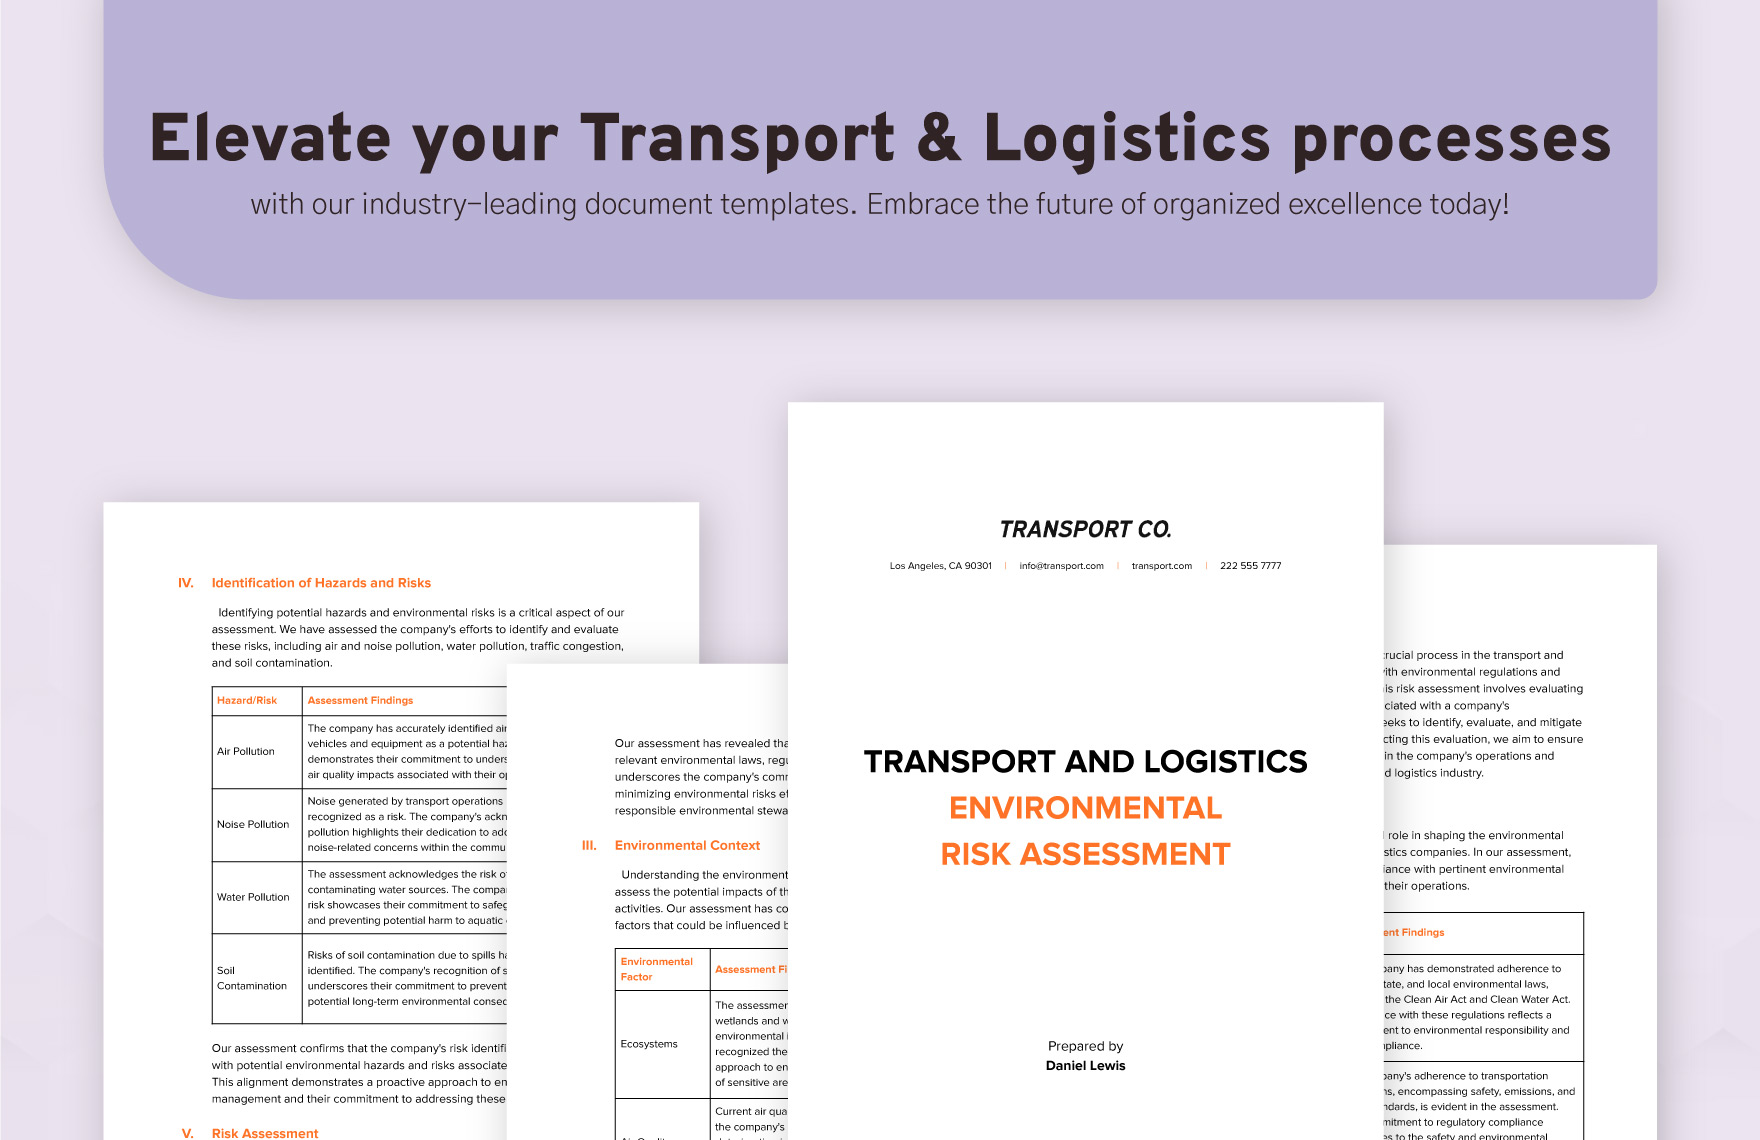 Transport and Logistics Environmental Risk Assessment Template